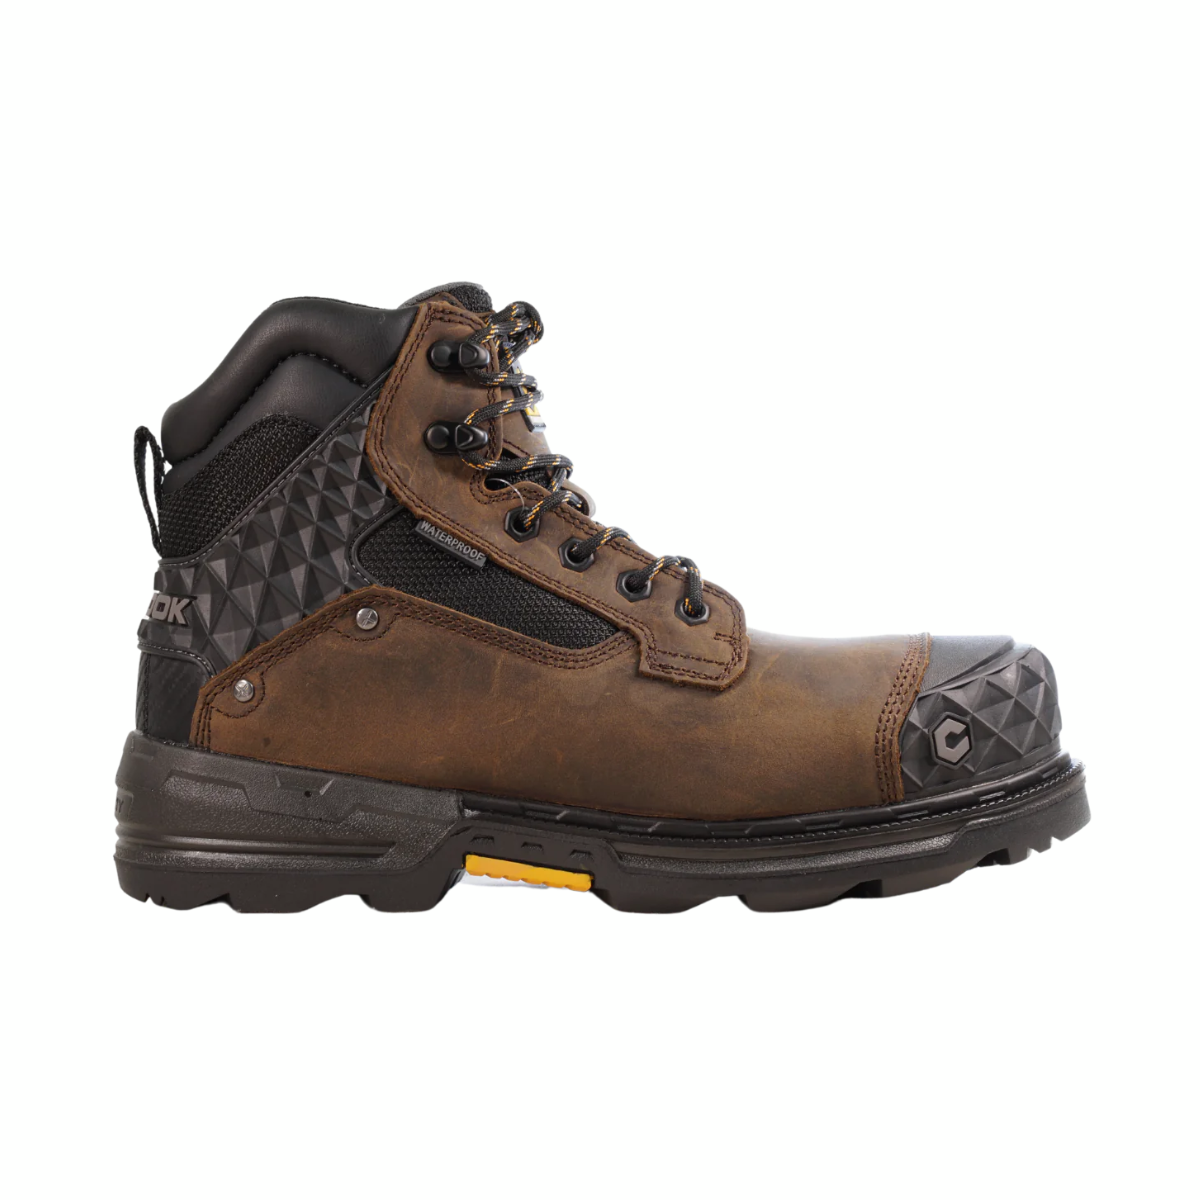 Pallet Jack 6" Comp Toe Men’s Waterproof Work Boot – Brown